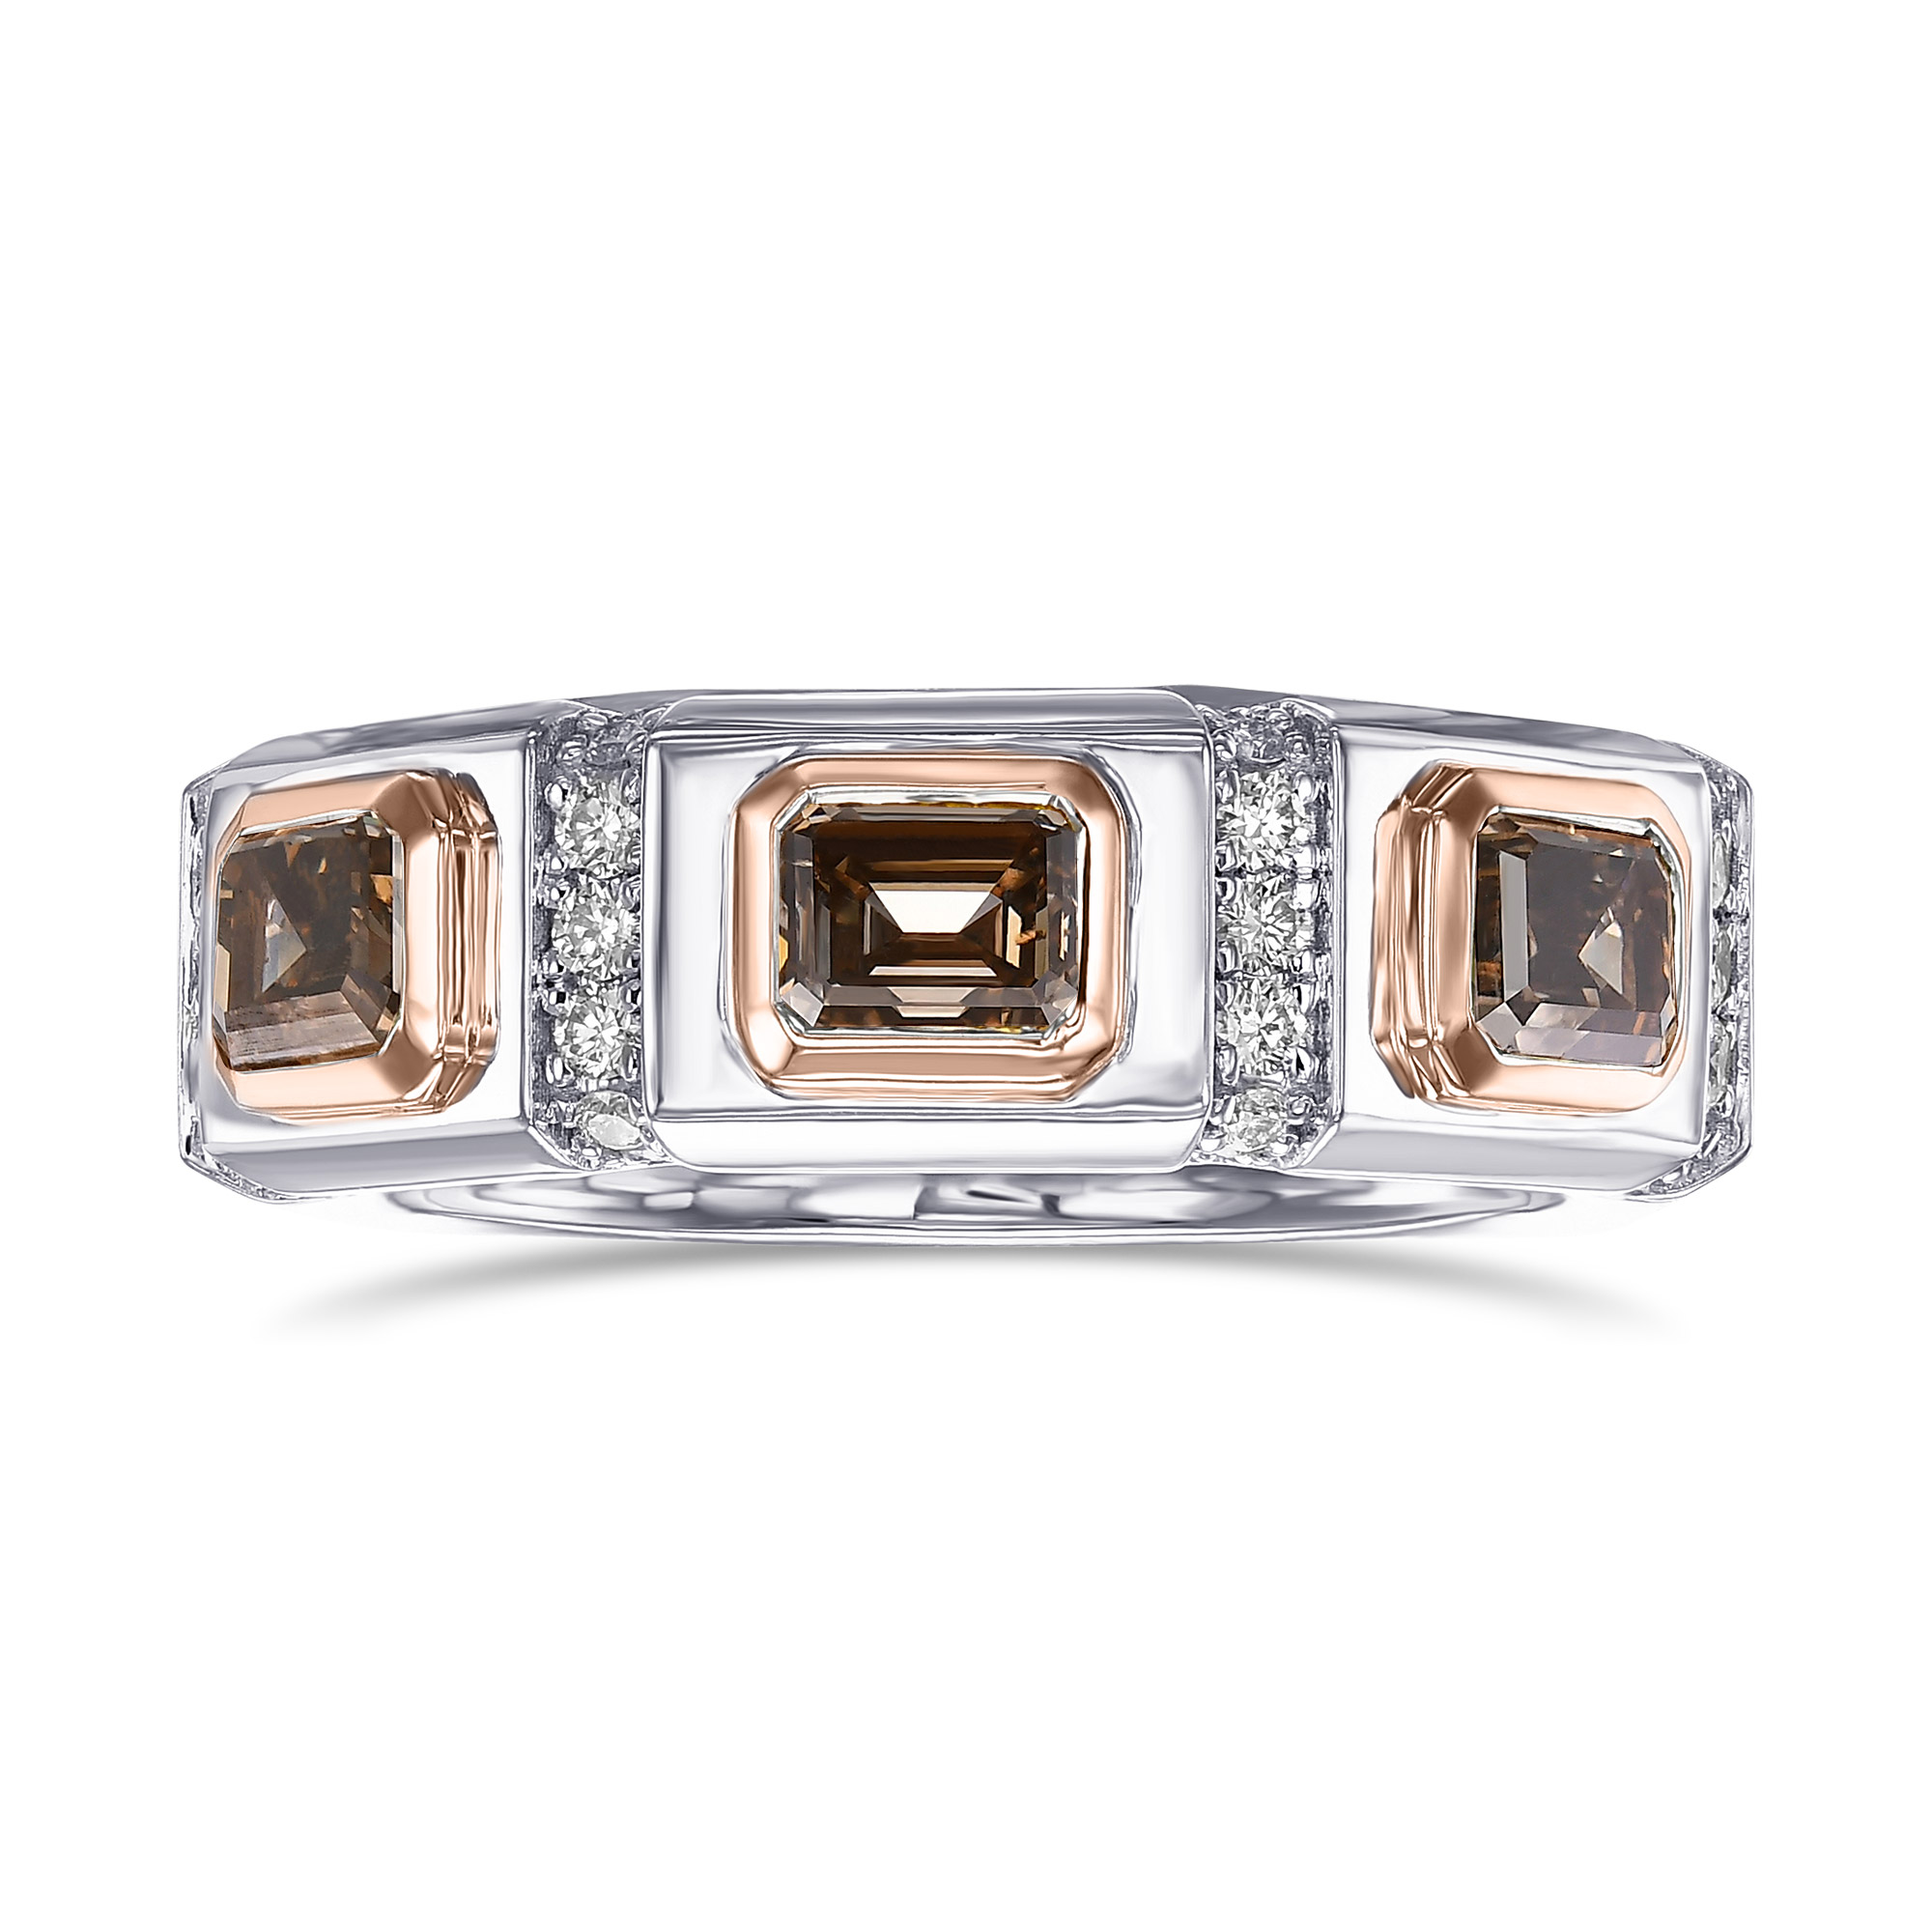 Men's Fancy Brown Three-stone Diamond Ring, SKU 522378 (2.69Ct TW)